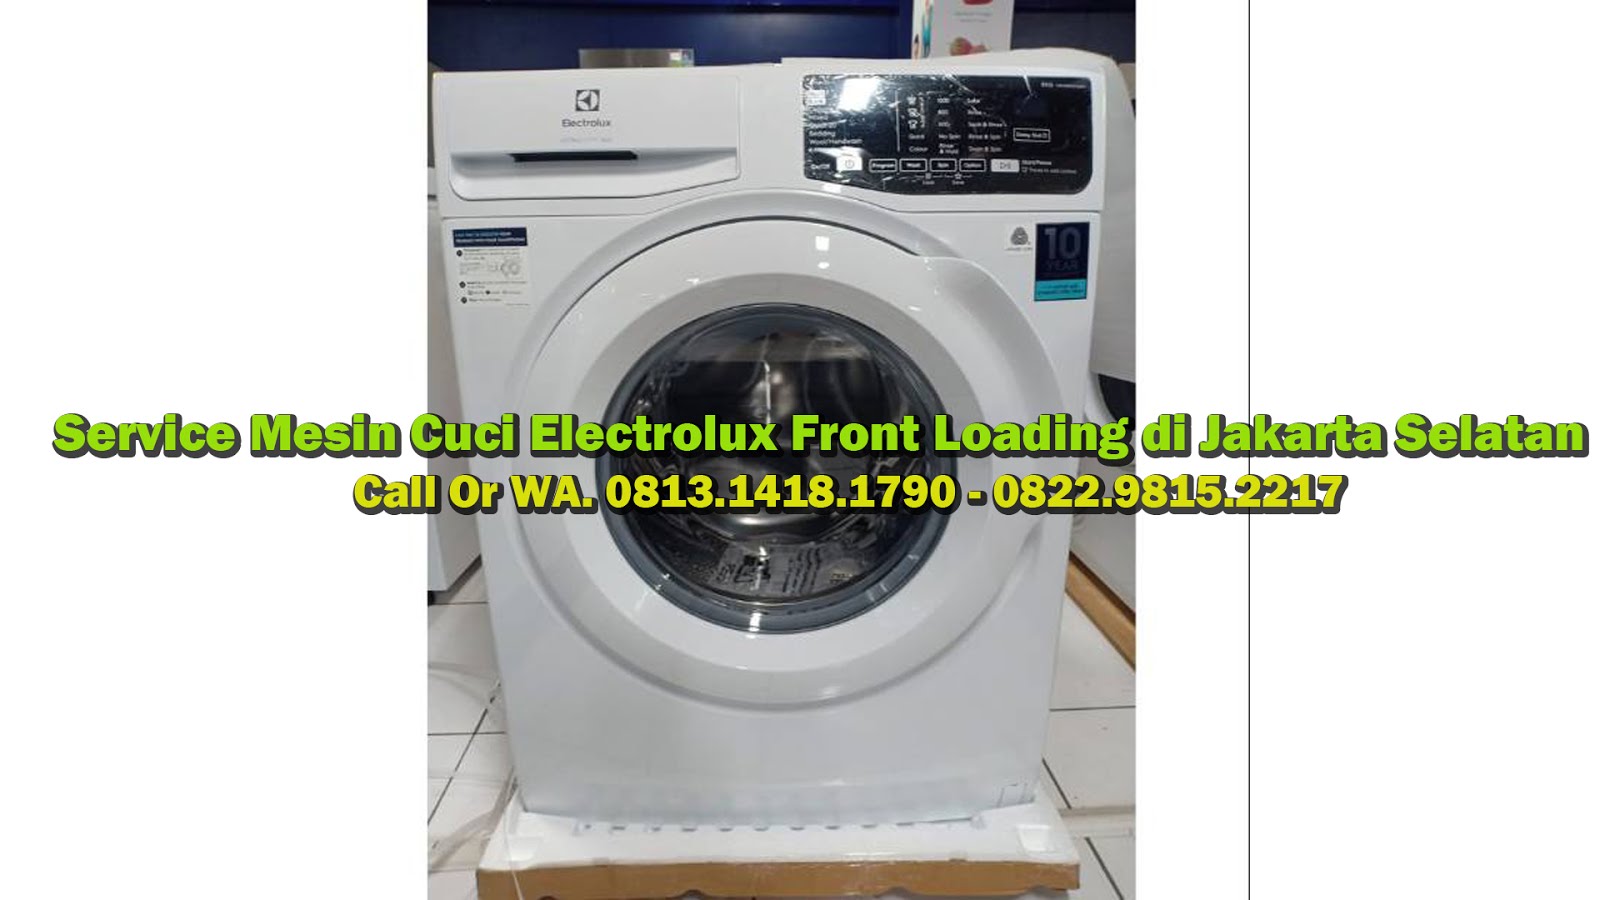 Service Mesin Cuci Electrolux di Jakarta Selatan